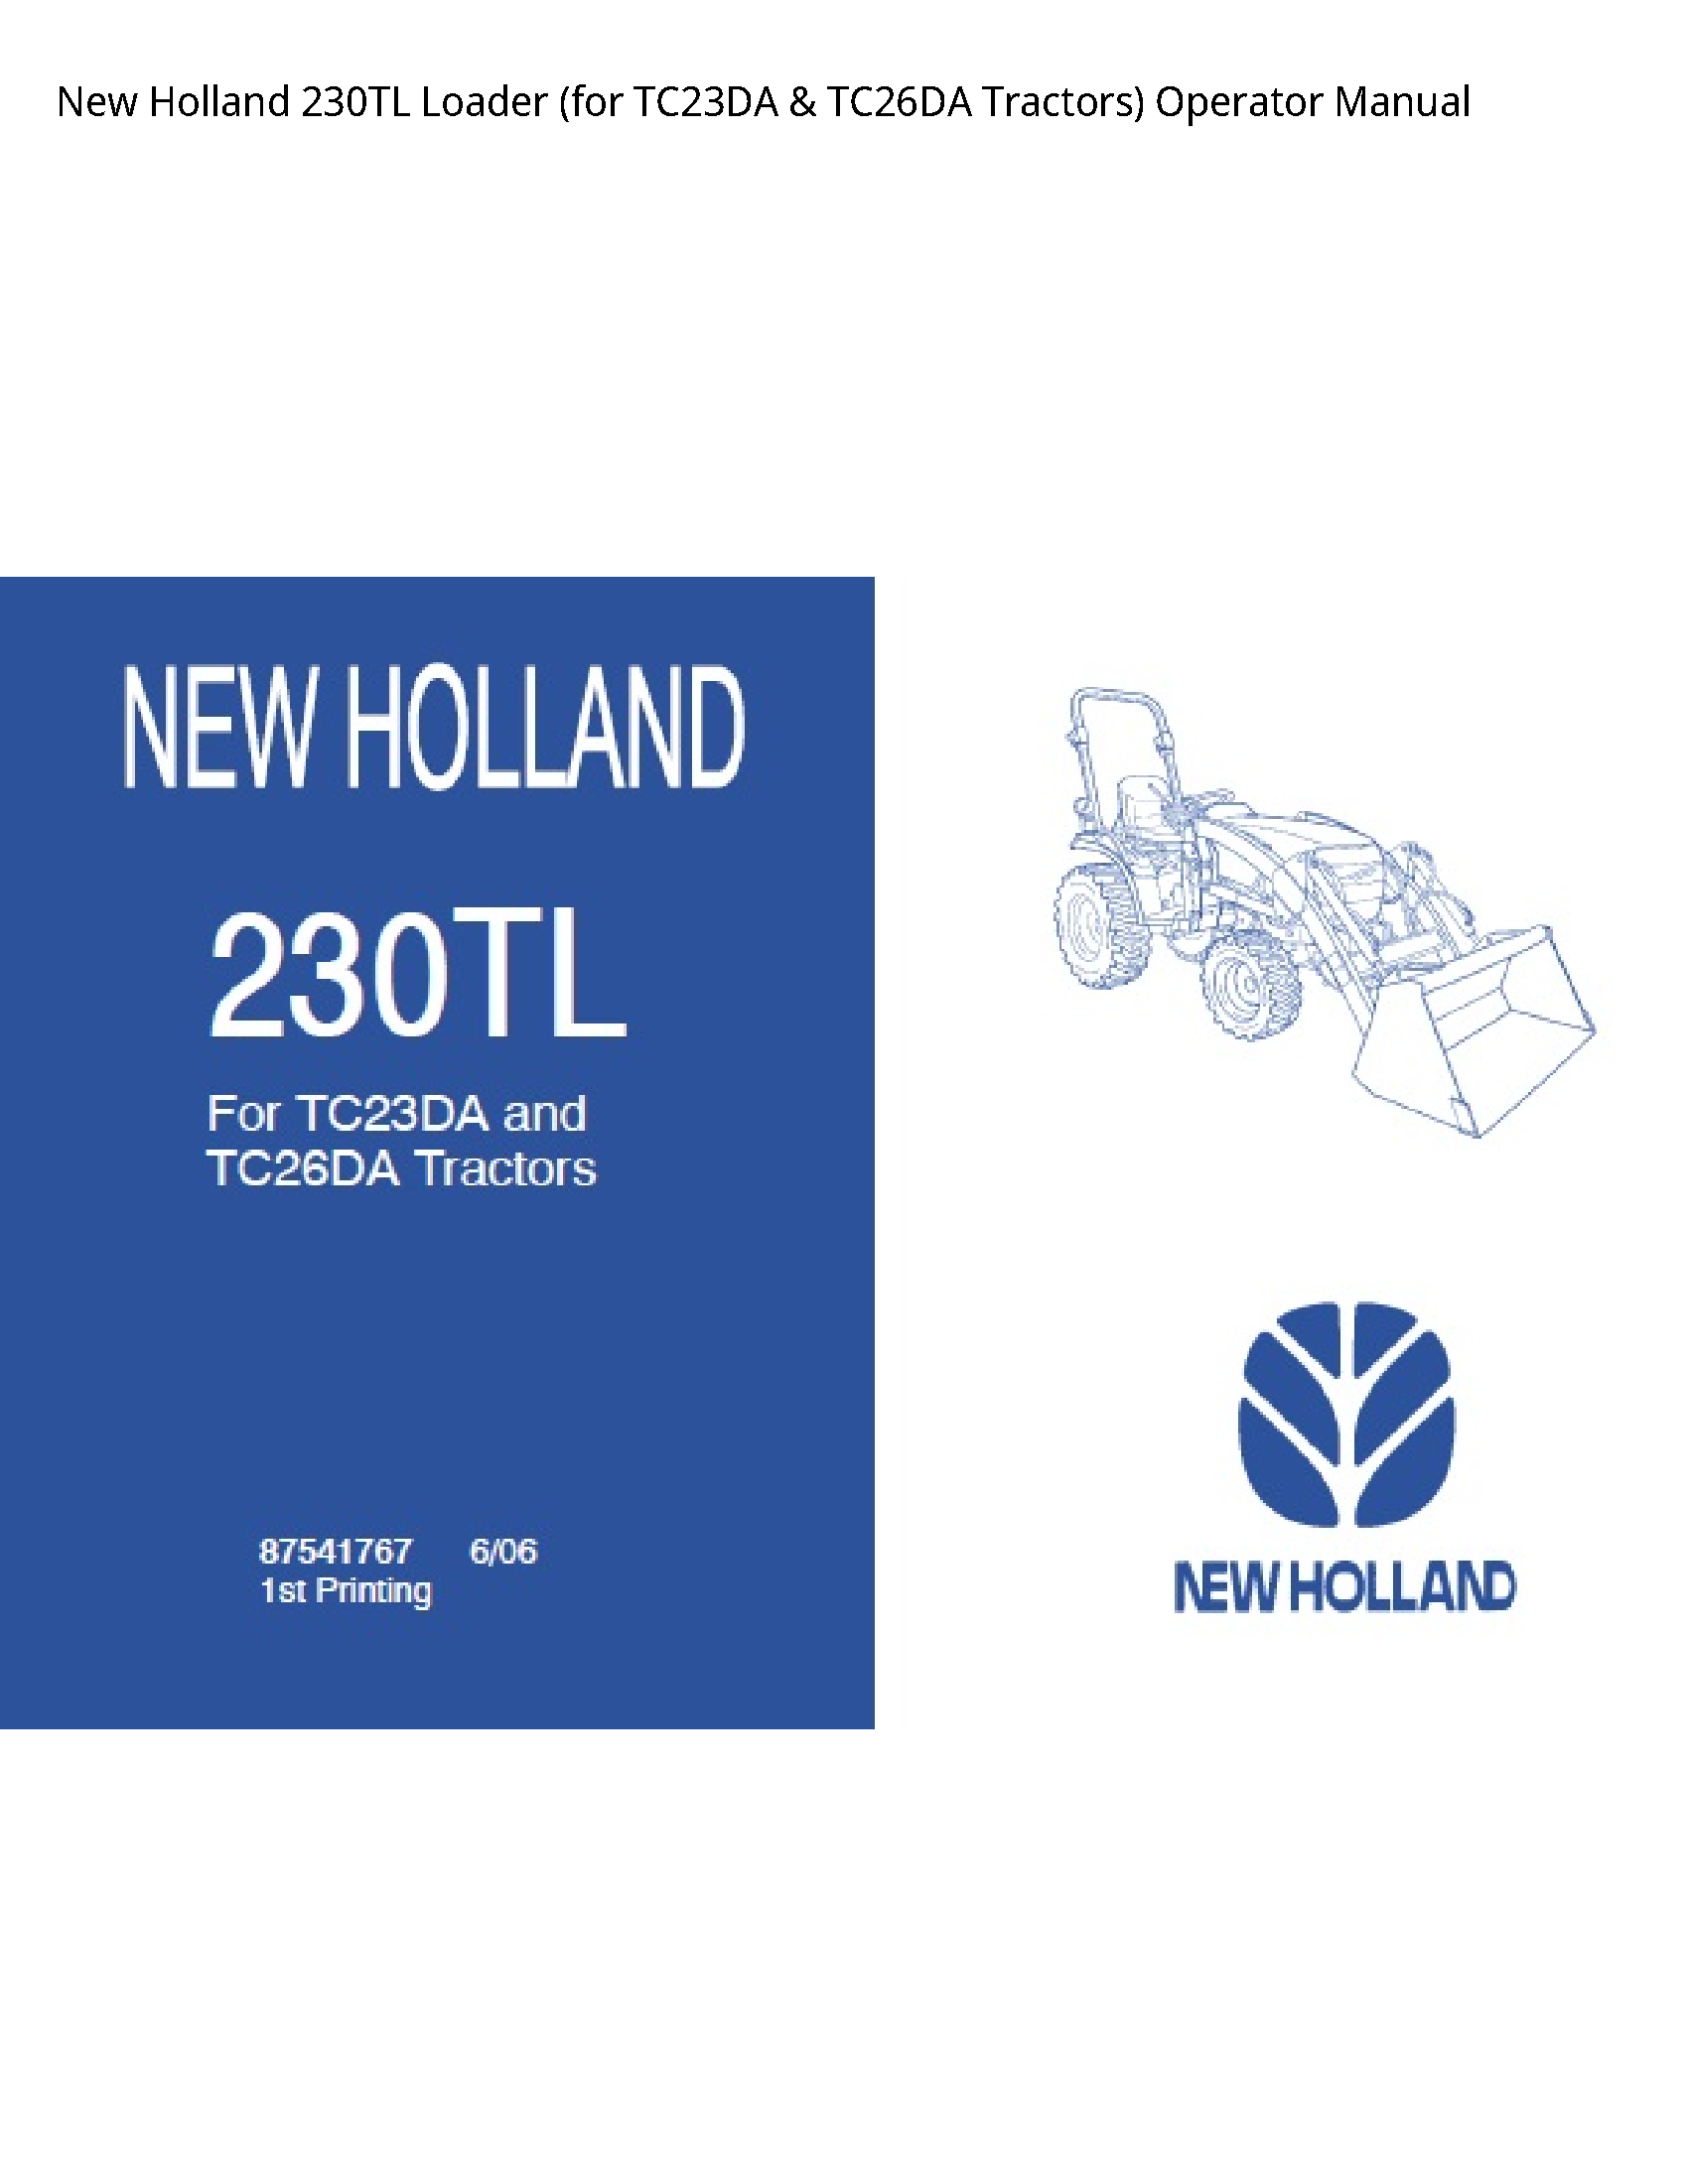 New Holland 230TL Loader (for Tractors) Operator manual